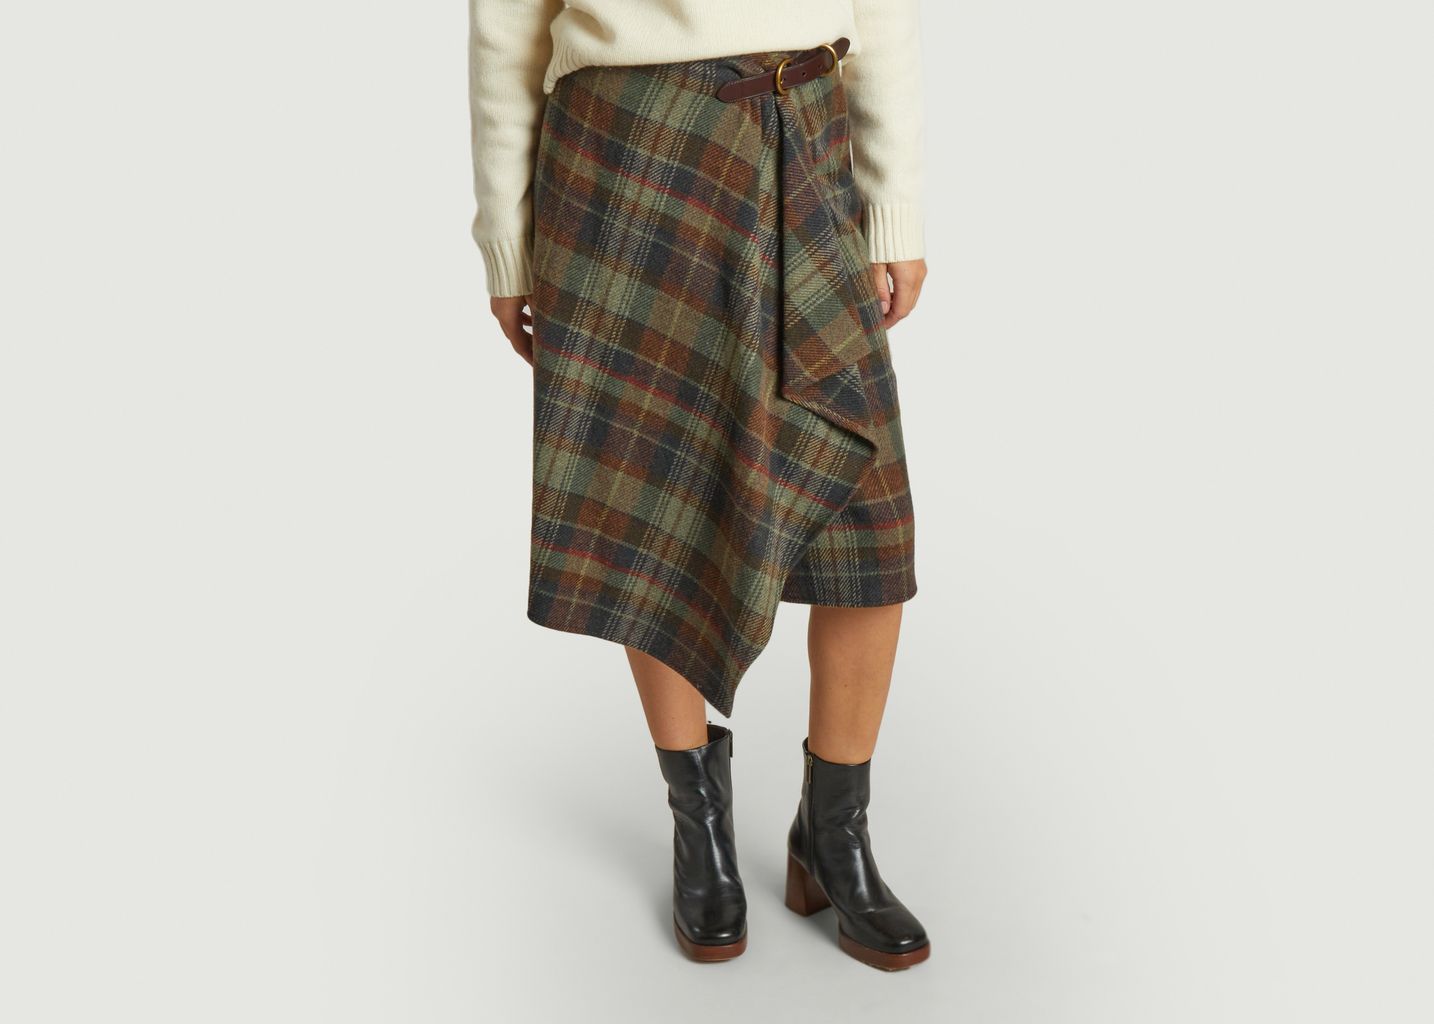 Tartan skirt with buckle and herringbone detail - Polo Ralph Lauren